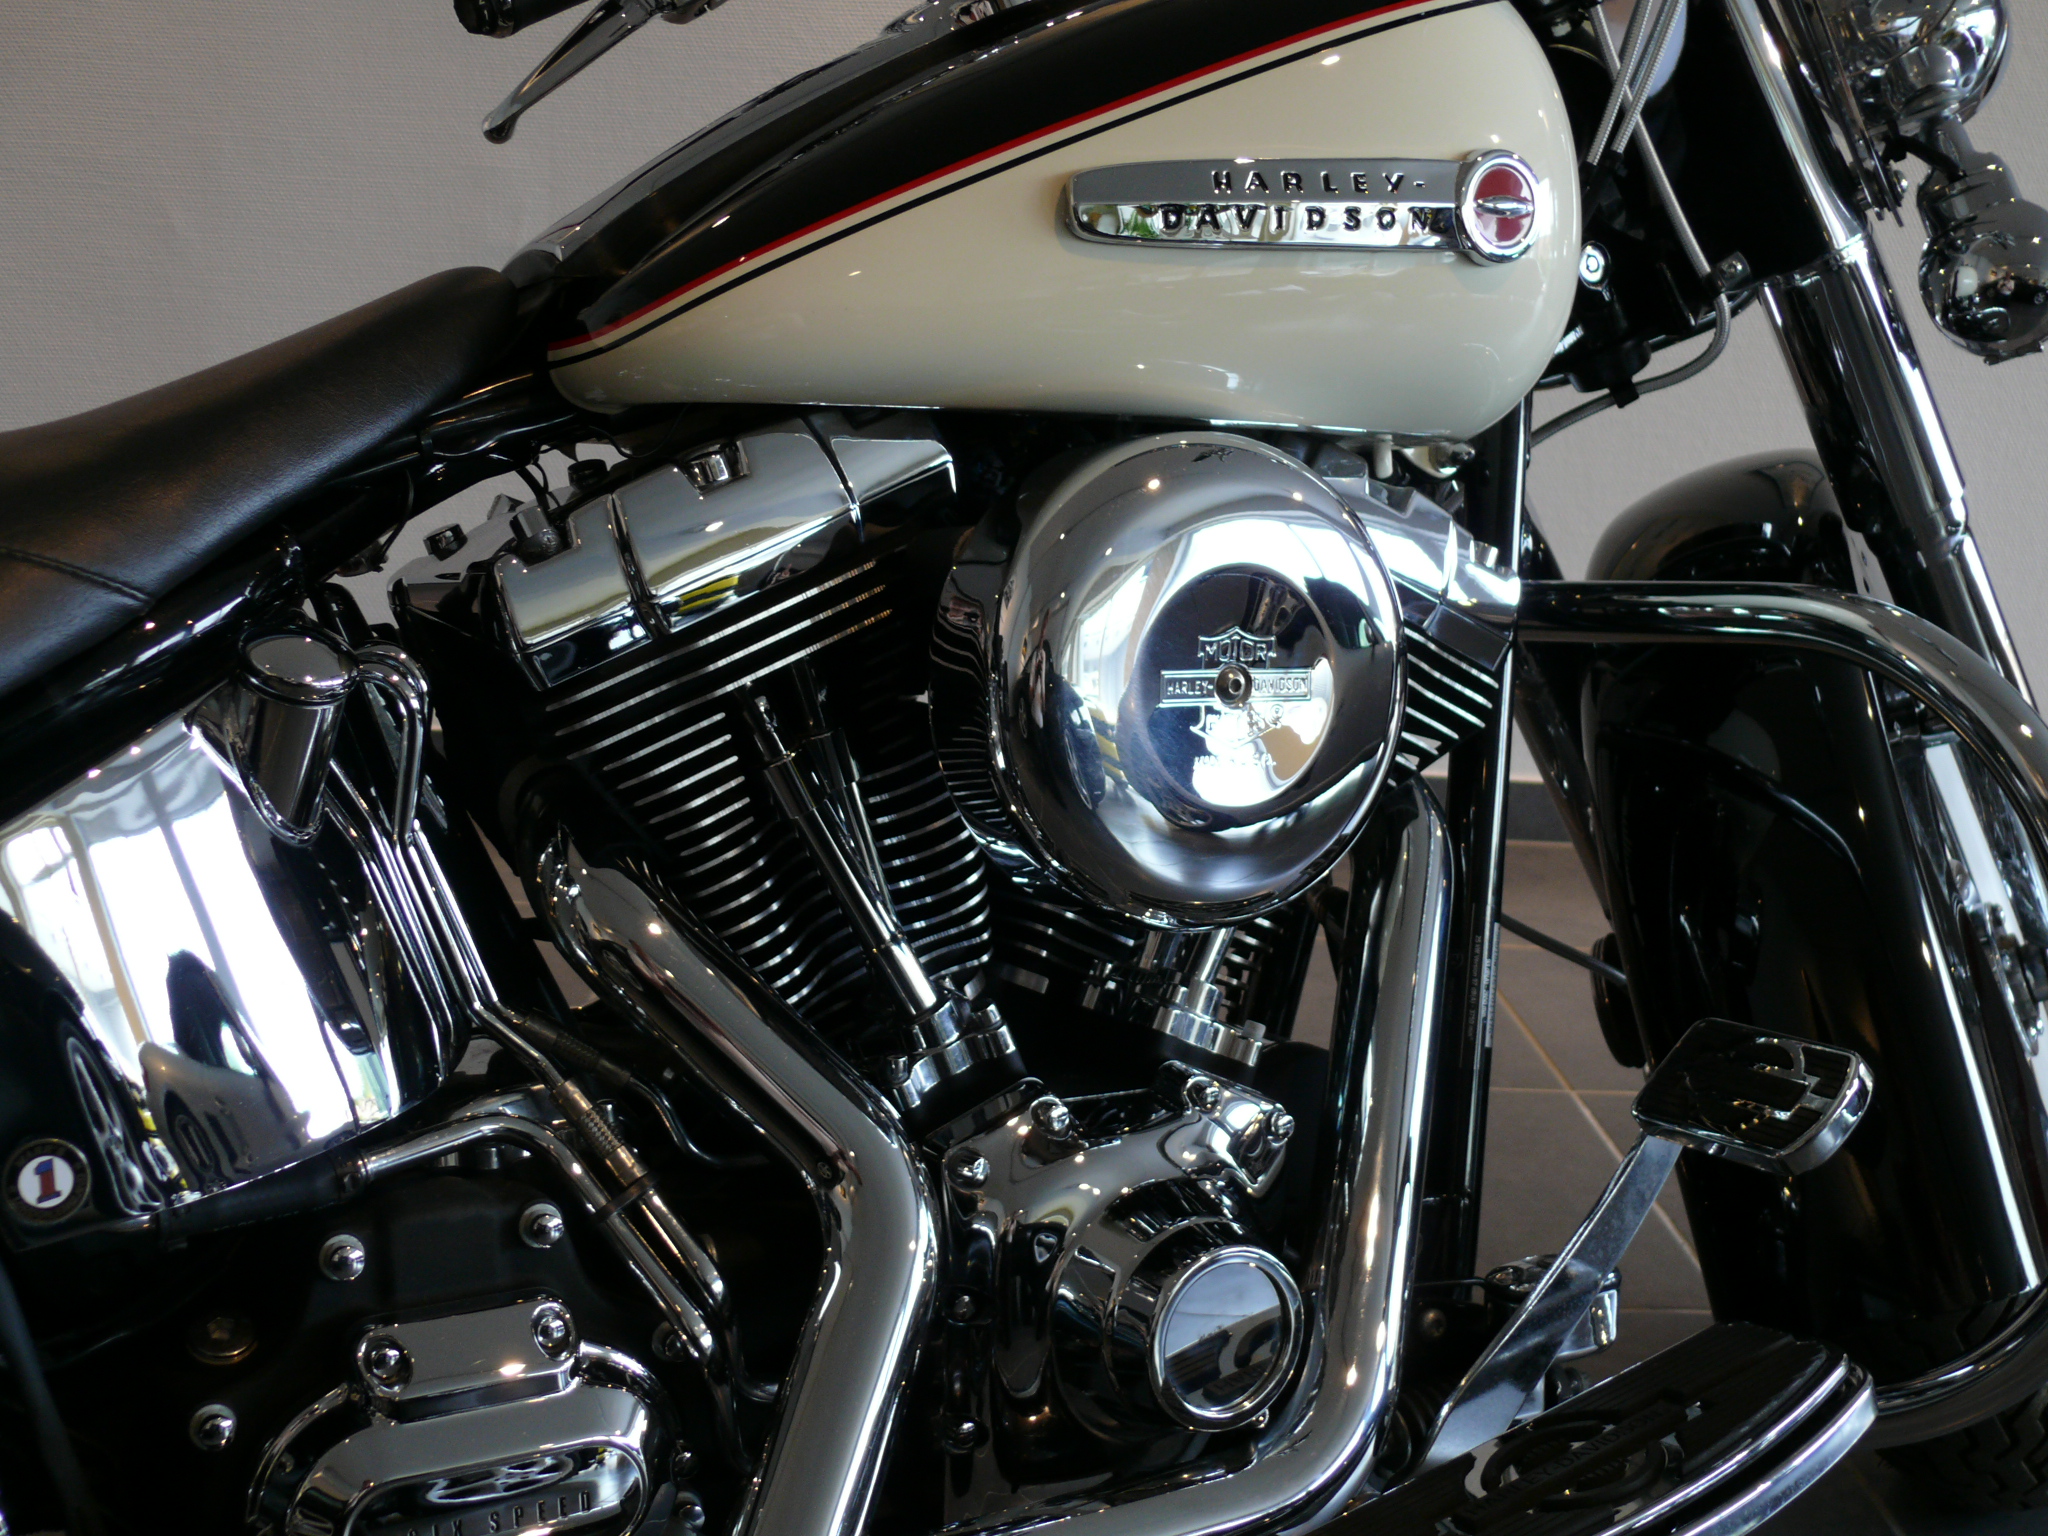 Harley Davidson Retro Style Bike Steel Borrow